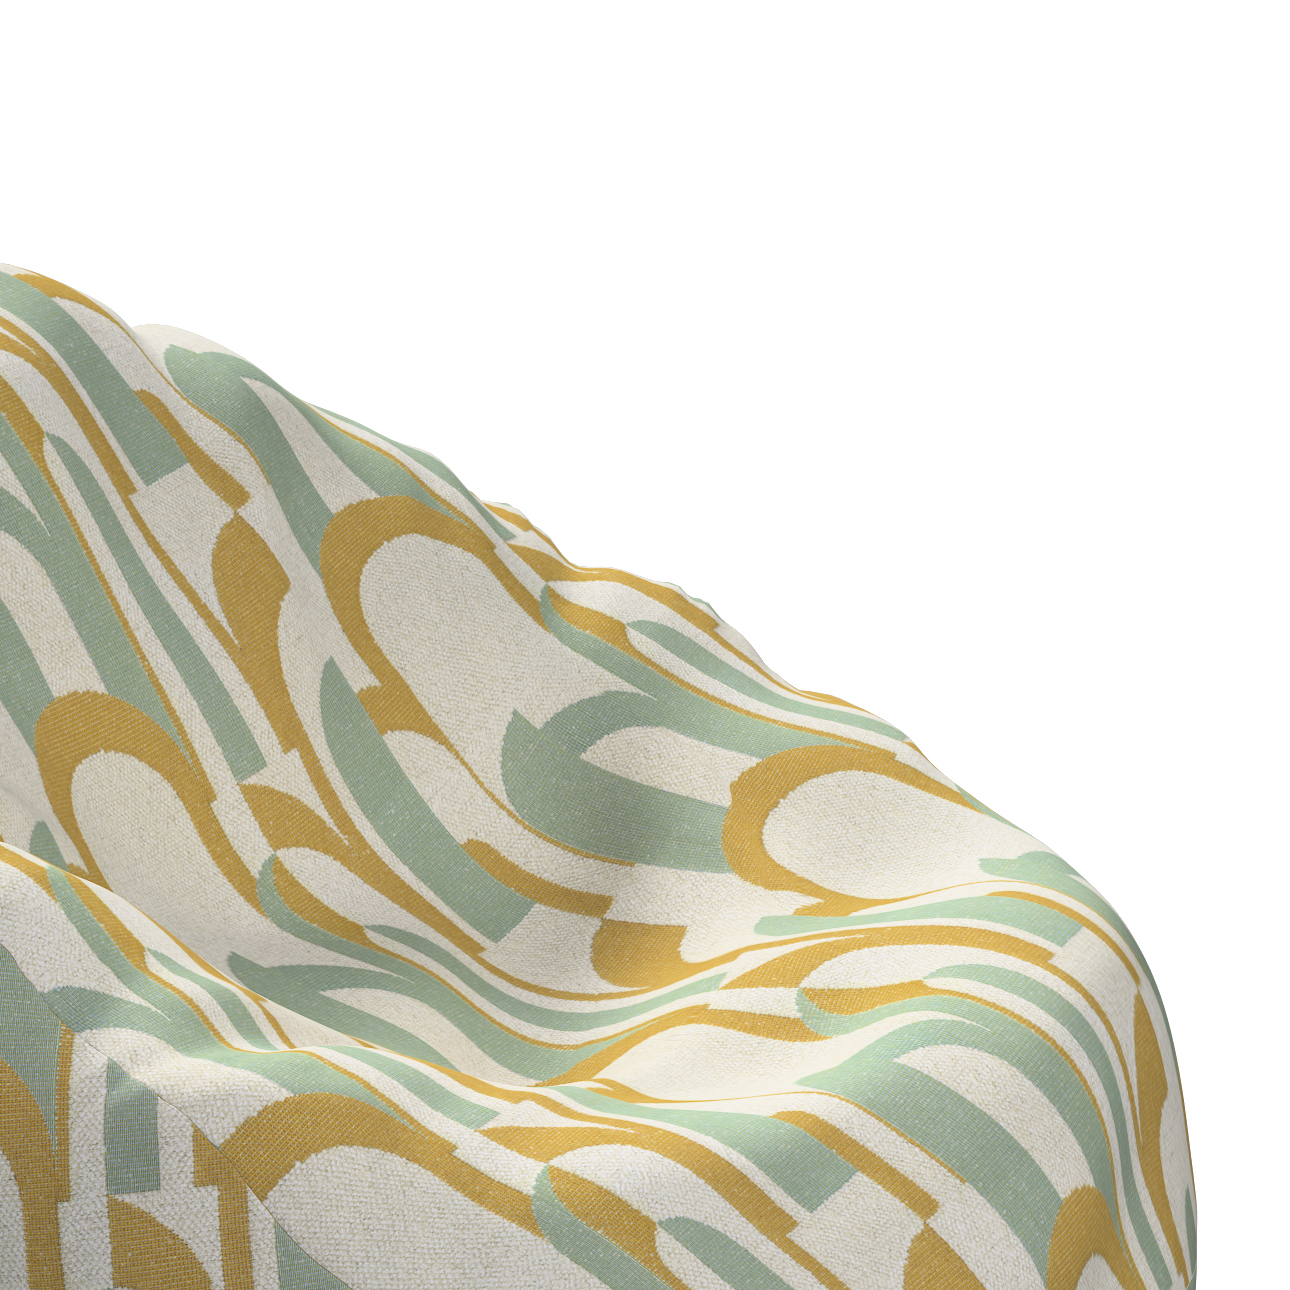 Bezug für Sitzsack, mintgrün-gelb, Bezug für Sitzsack Ø80 x 115 cm, Cosy Ho günstig online kaufen